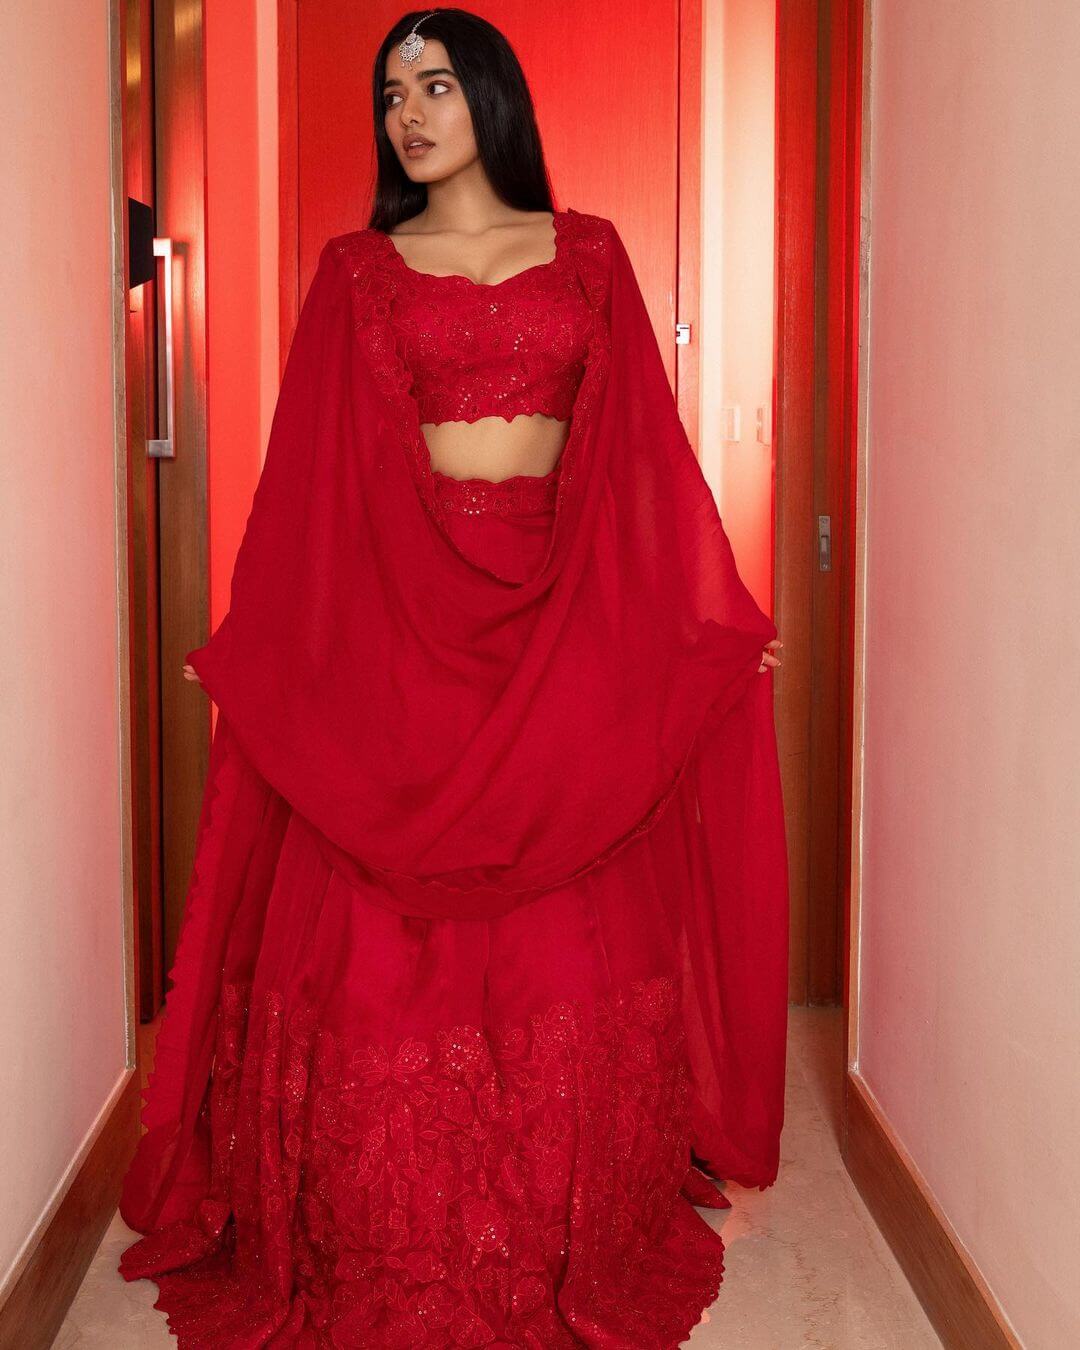 Ketika Sharma Look Gorgeous In Red Lehenga Outfit Ketika Sharma Classy and Sassy Outfit Looks